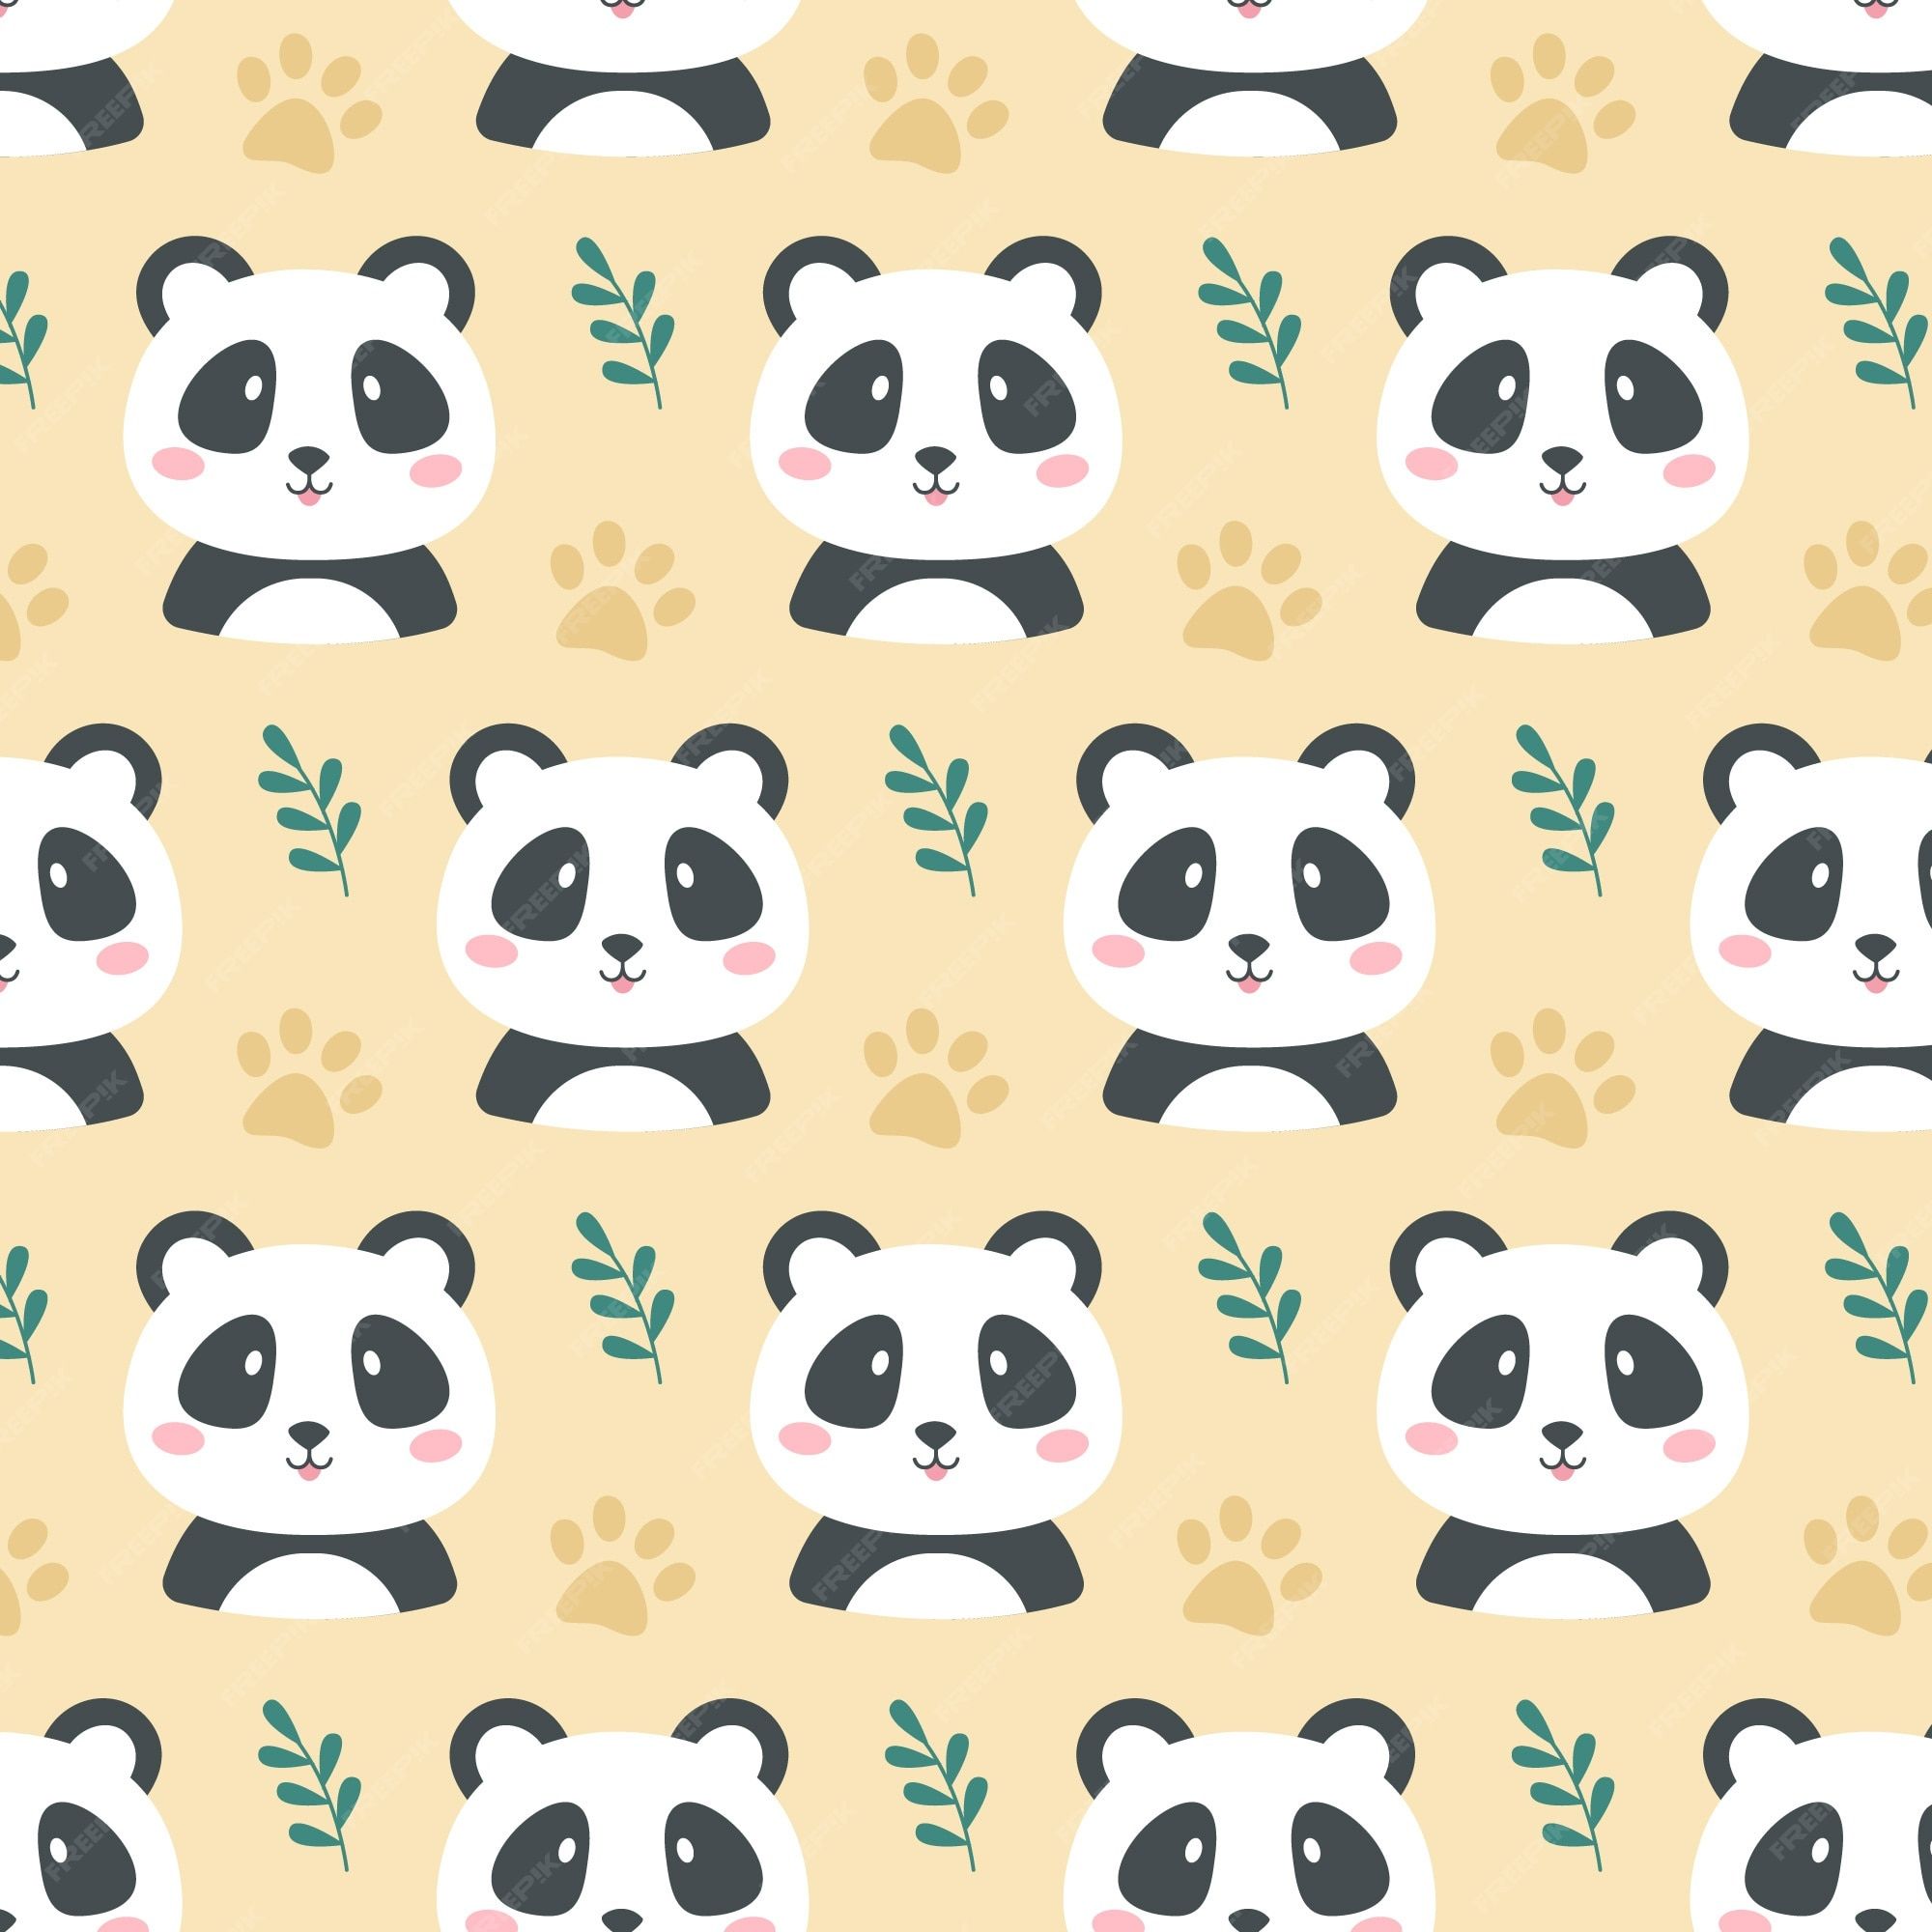 Cute panda wallpaper Vectors & Illustrations for Free Download